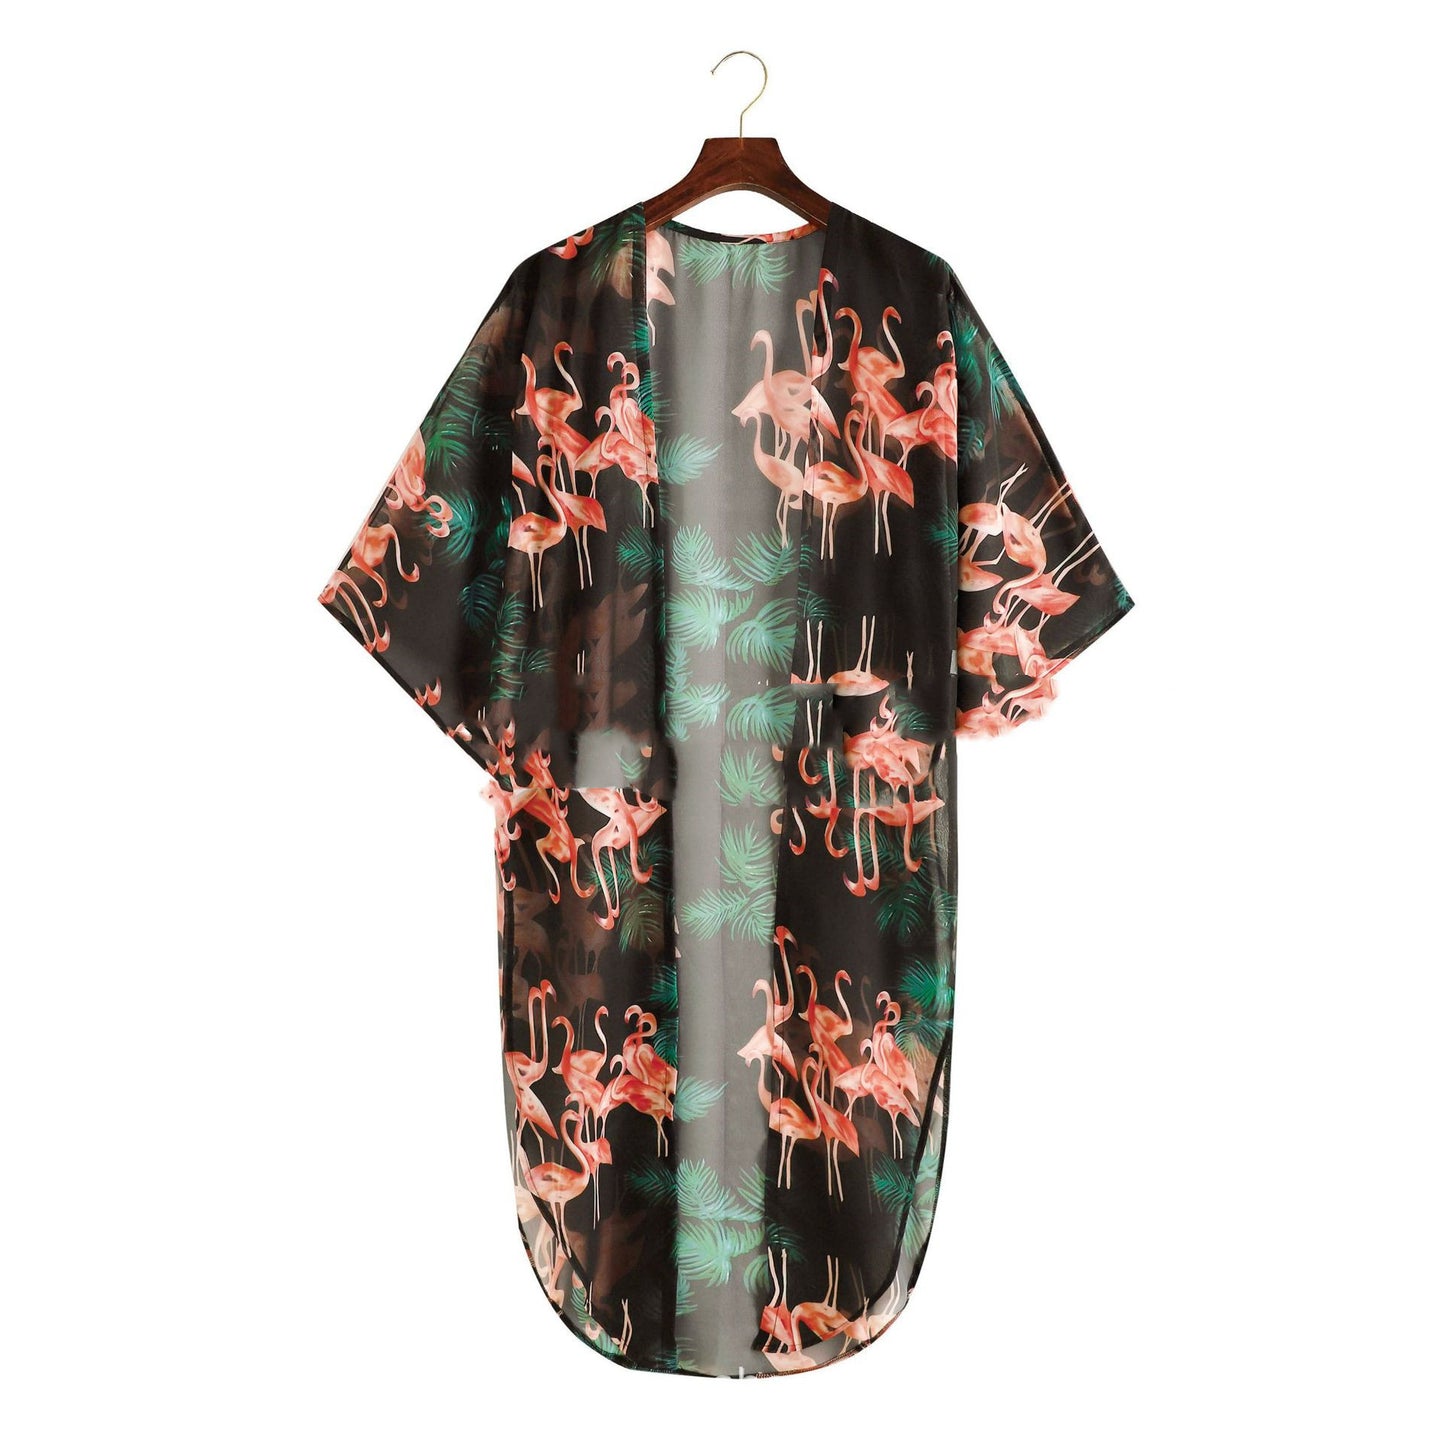 Island Breeze in Chiffon: Flowy chiffon and tropical prints create a breezy Hawaiian shirt for summer.